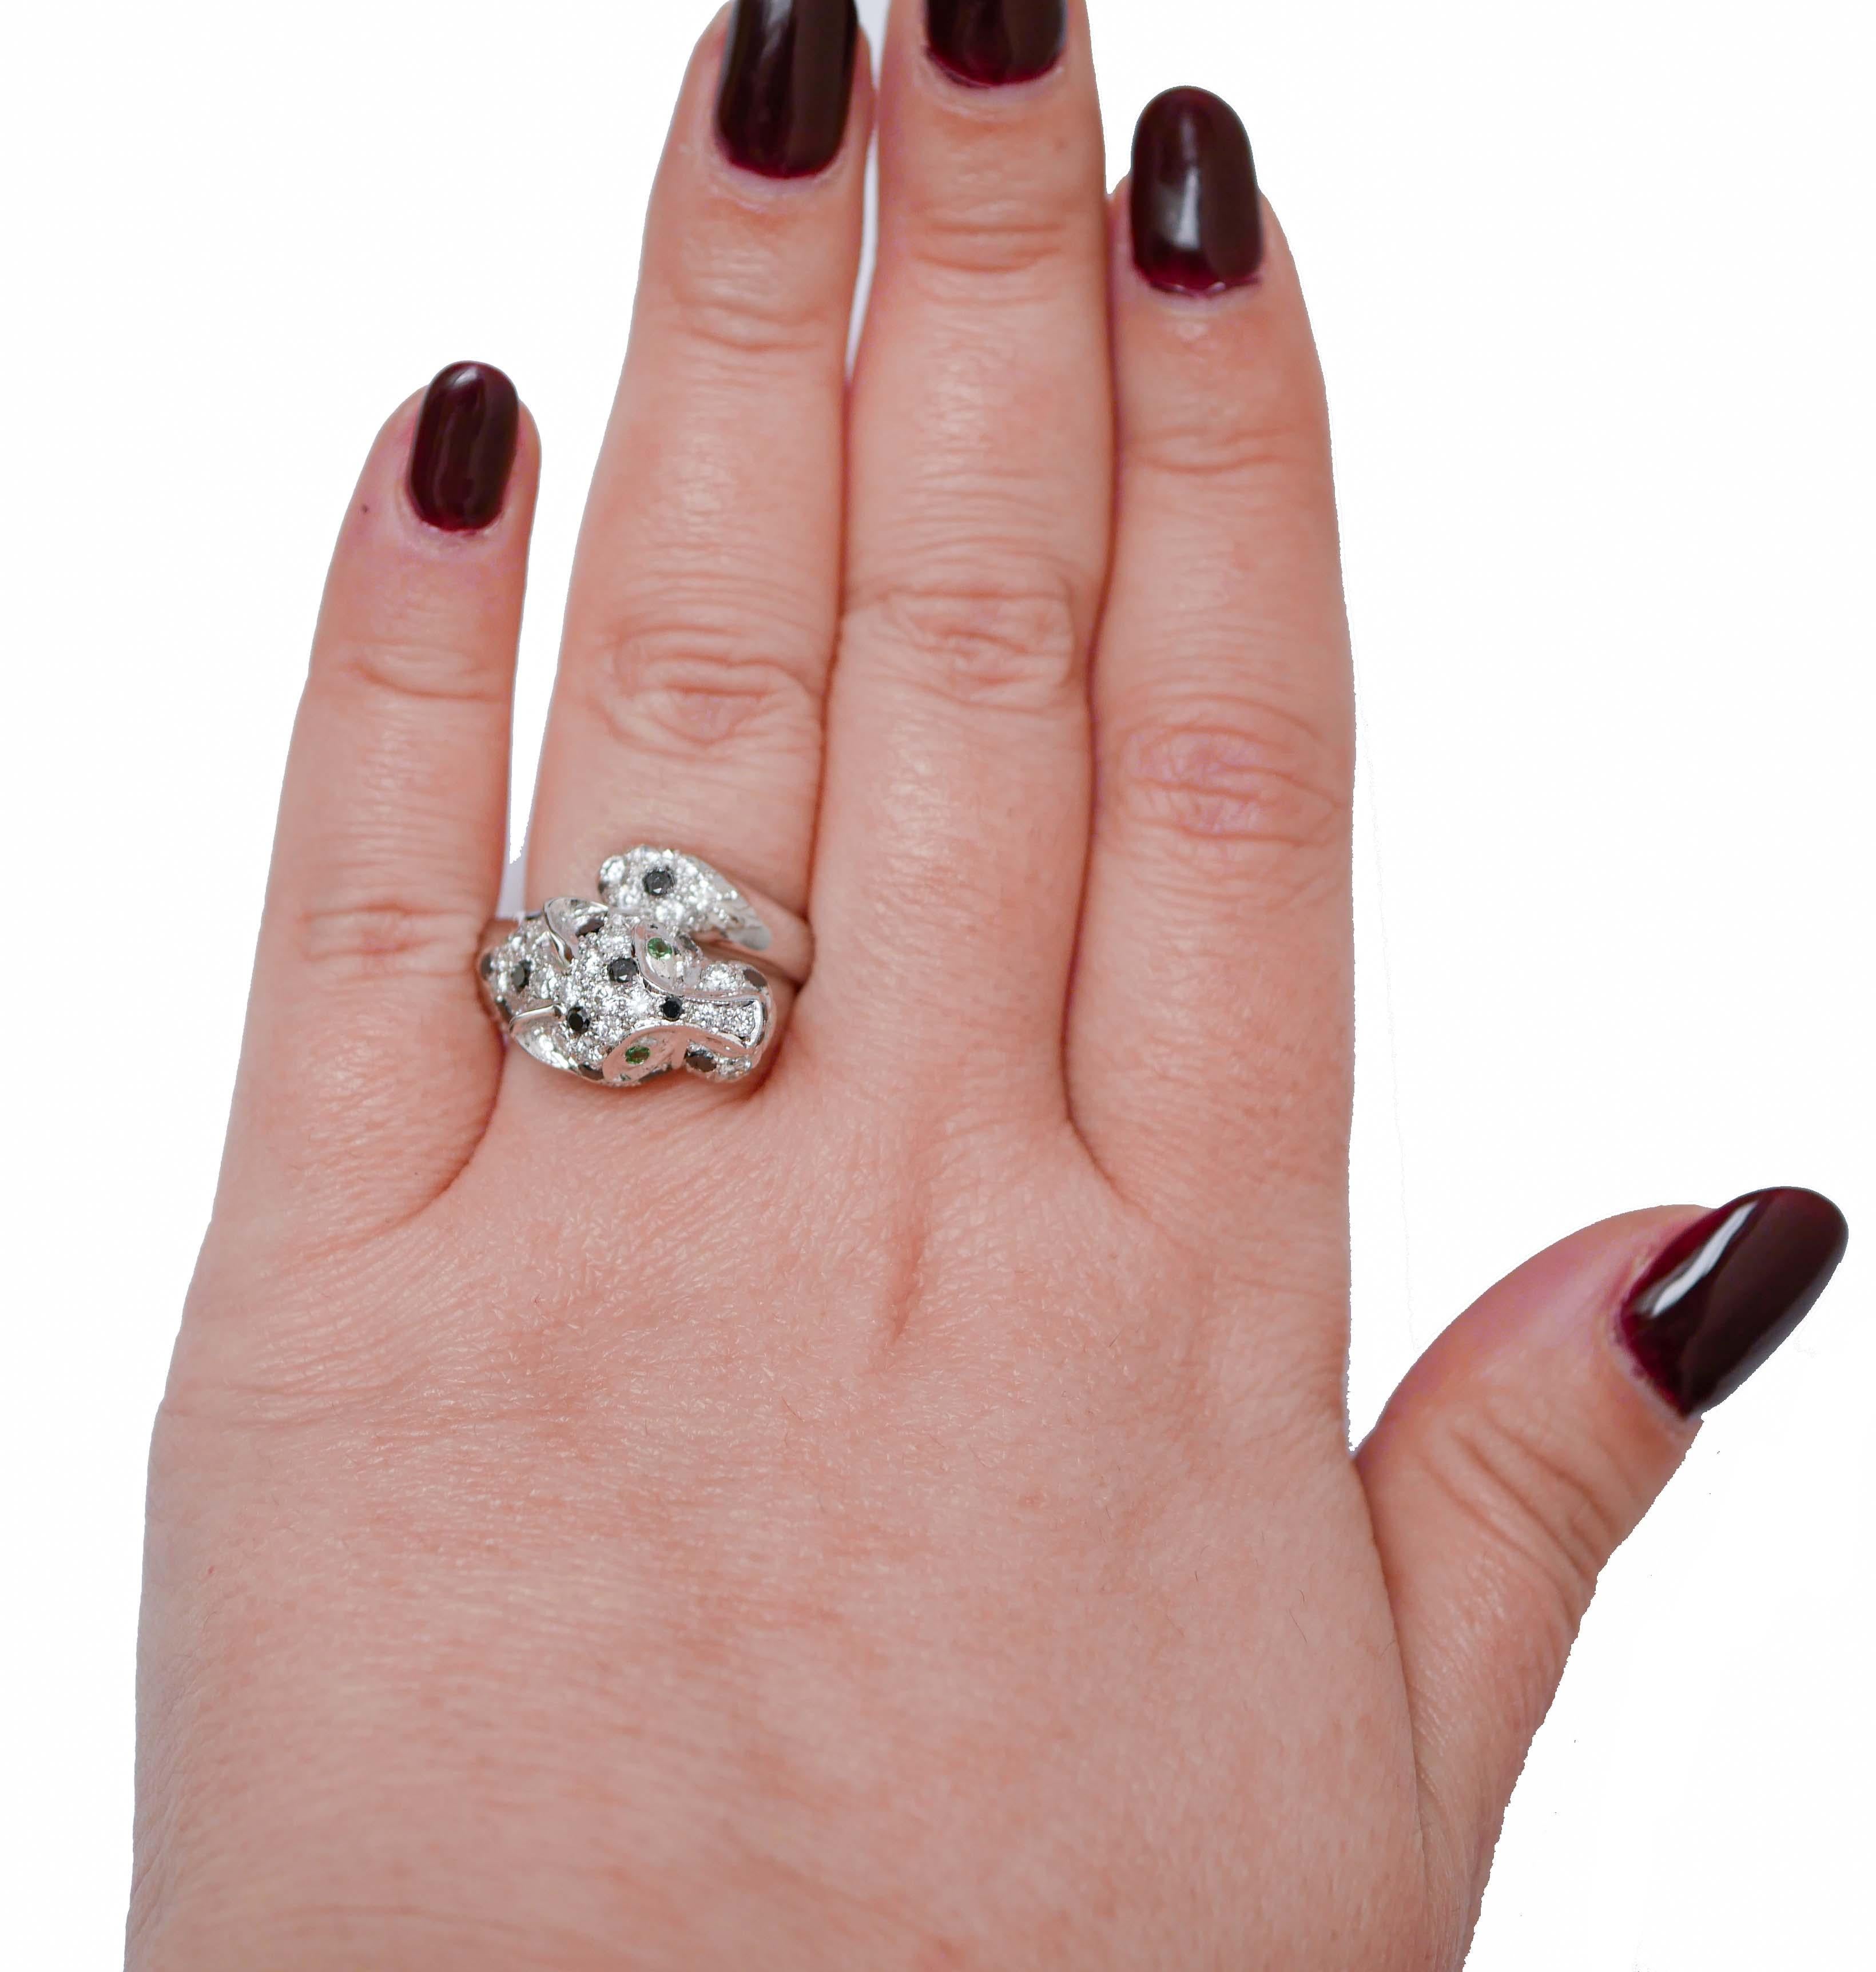 Mixed Cut Tsavorite, Black Diamonds and White Diamonds, 18 Karat White Gold Ring. For Sale